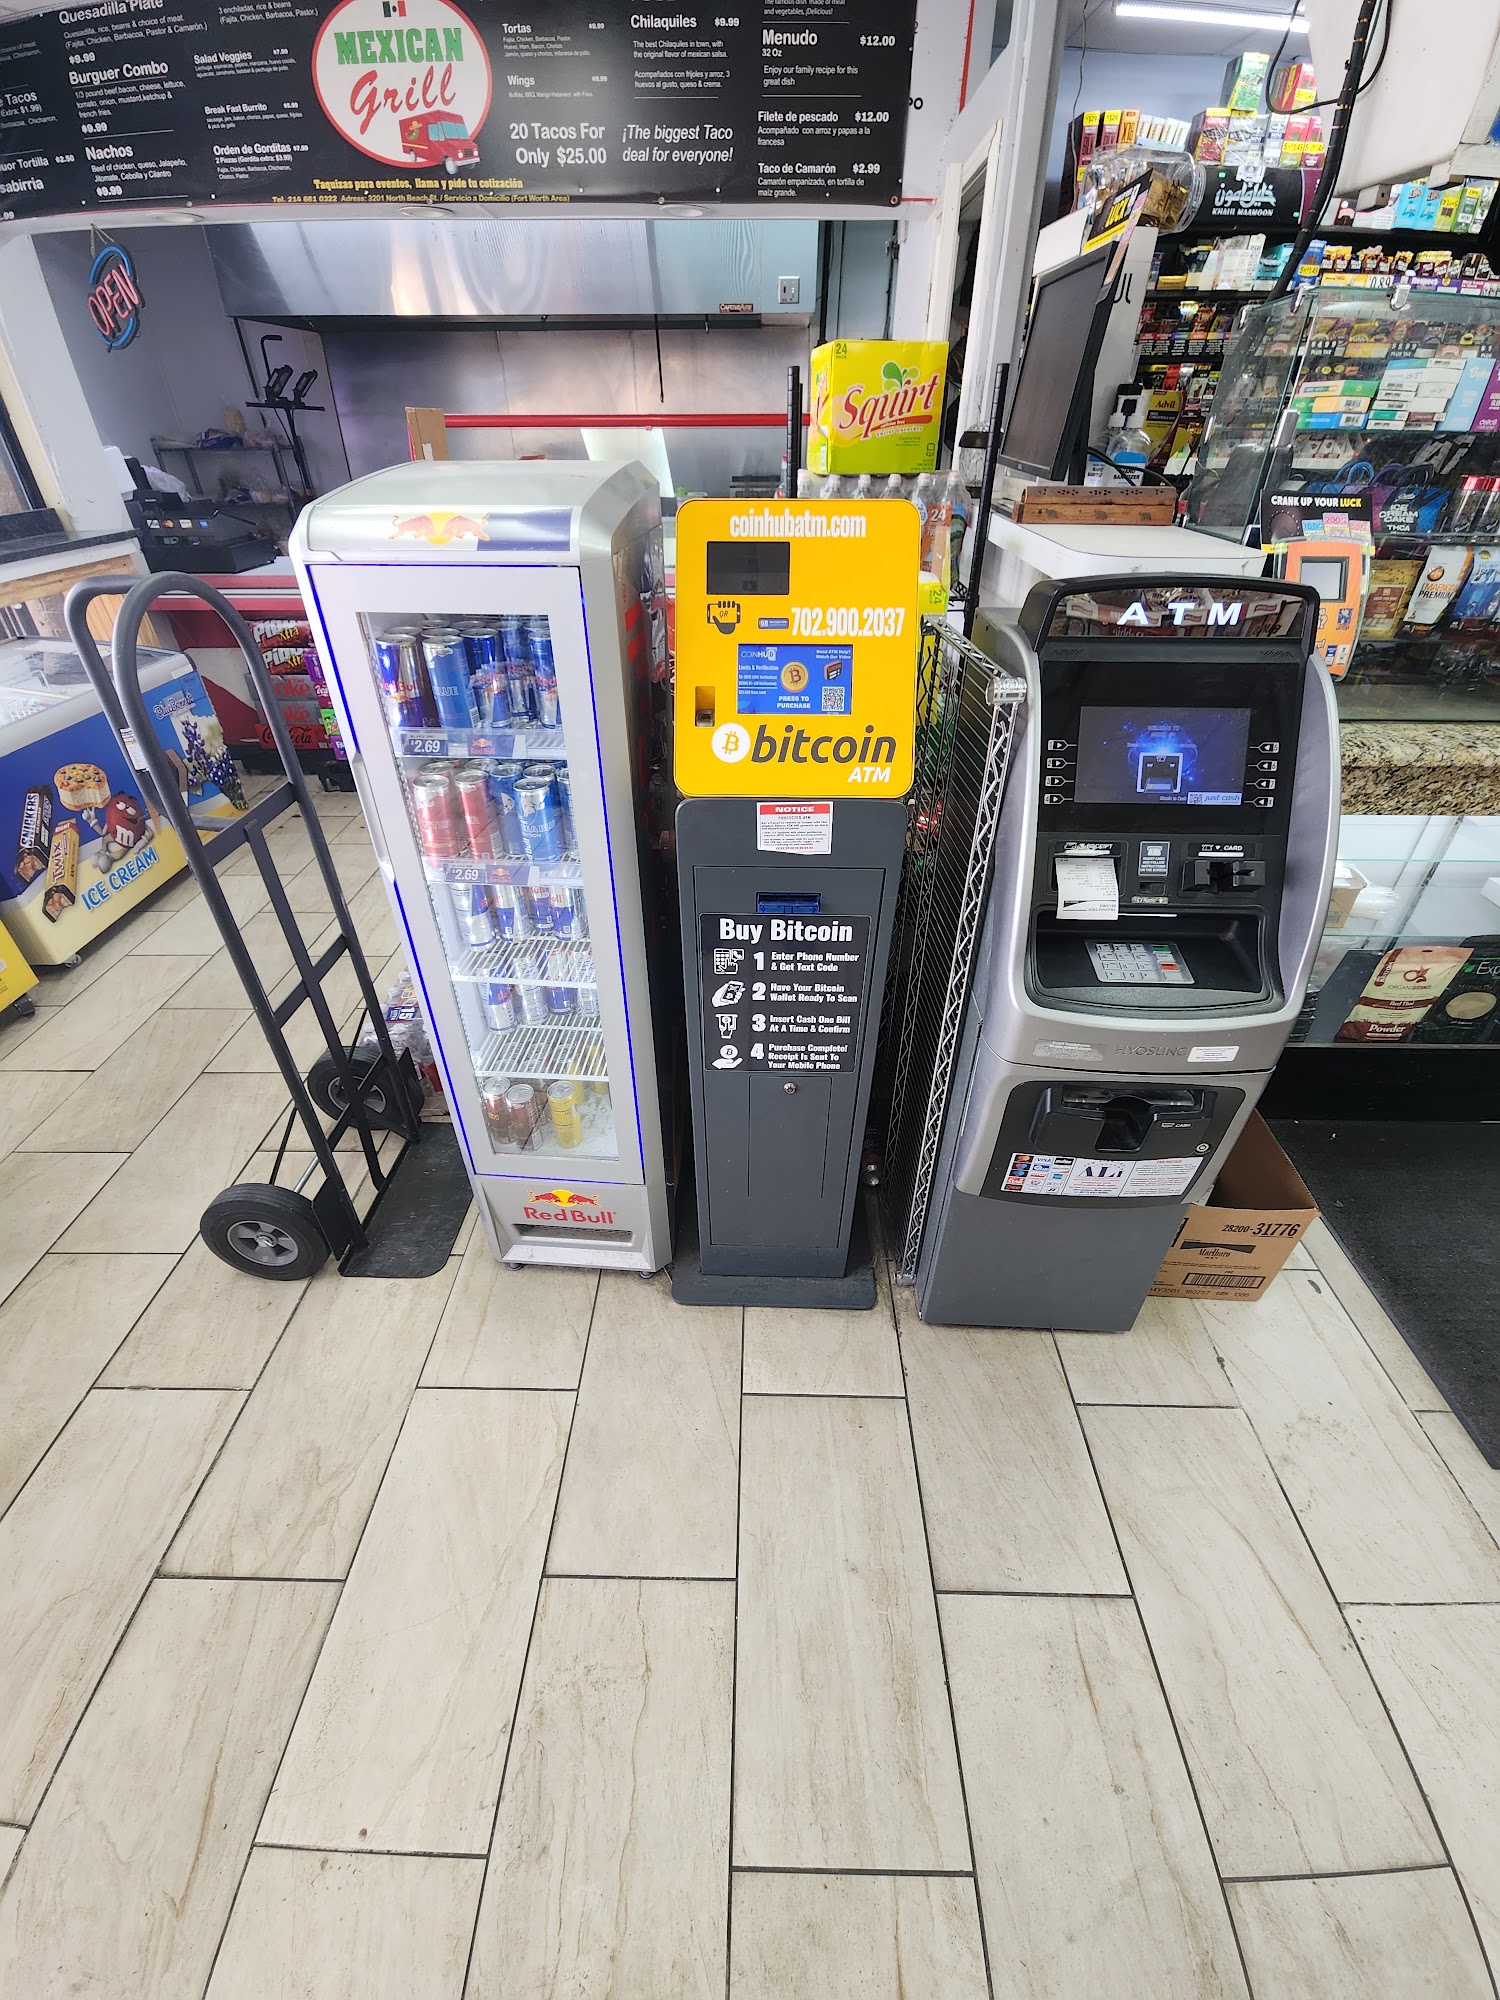 Bitcoin ATM Fort Worth - Coinhub